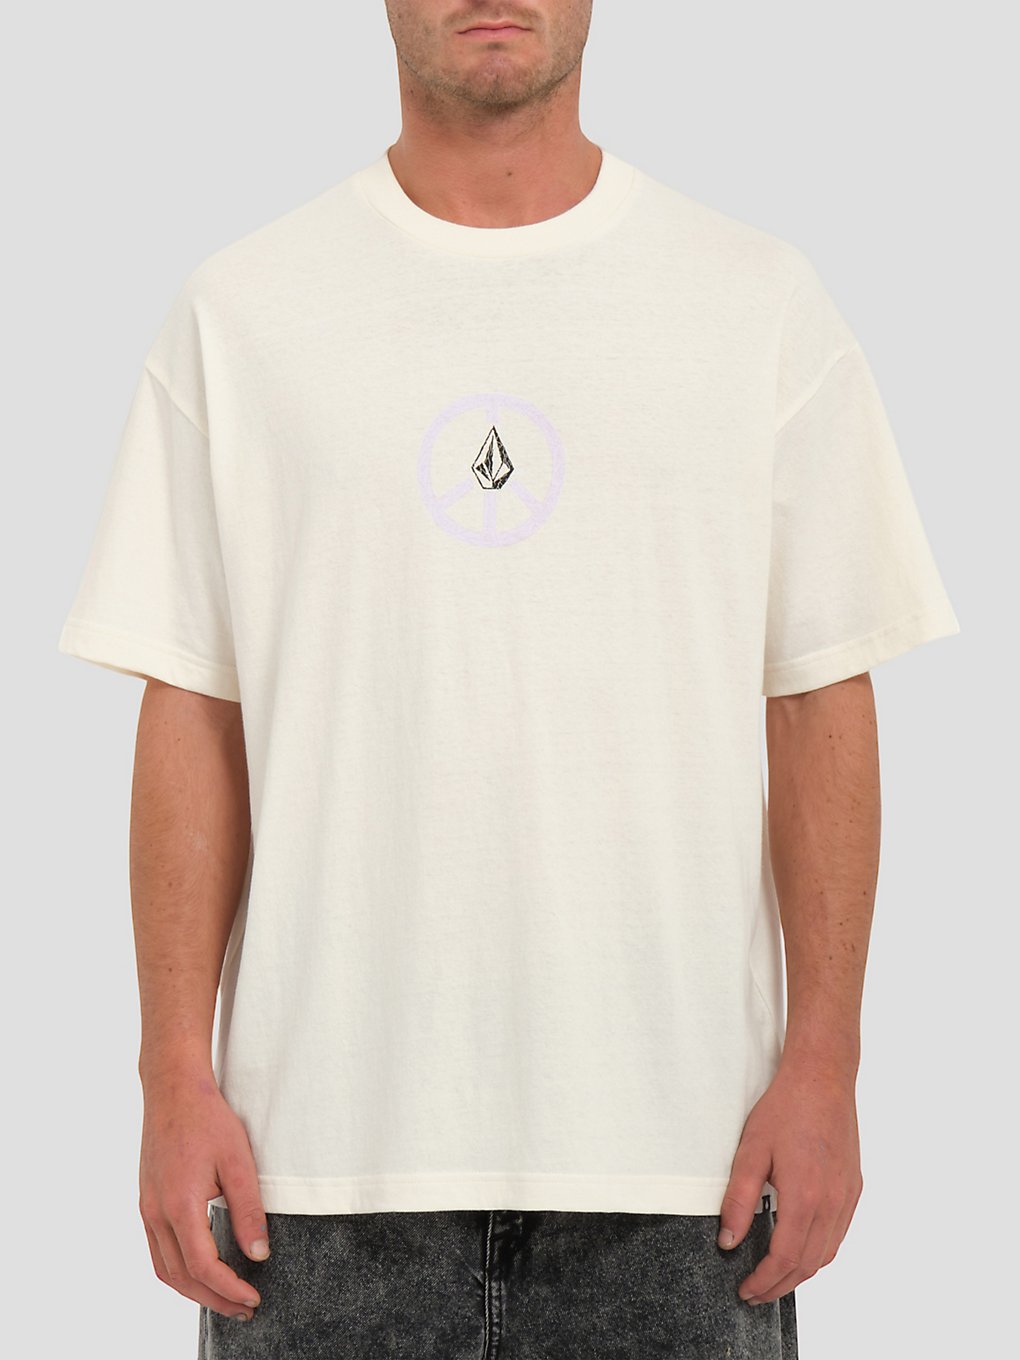 Volcom Breakpeace Lse T-Shirt dirty white kaufen